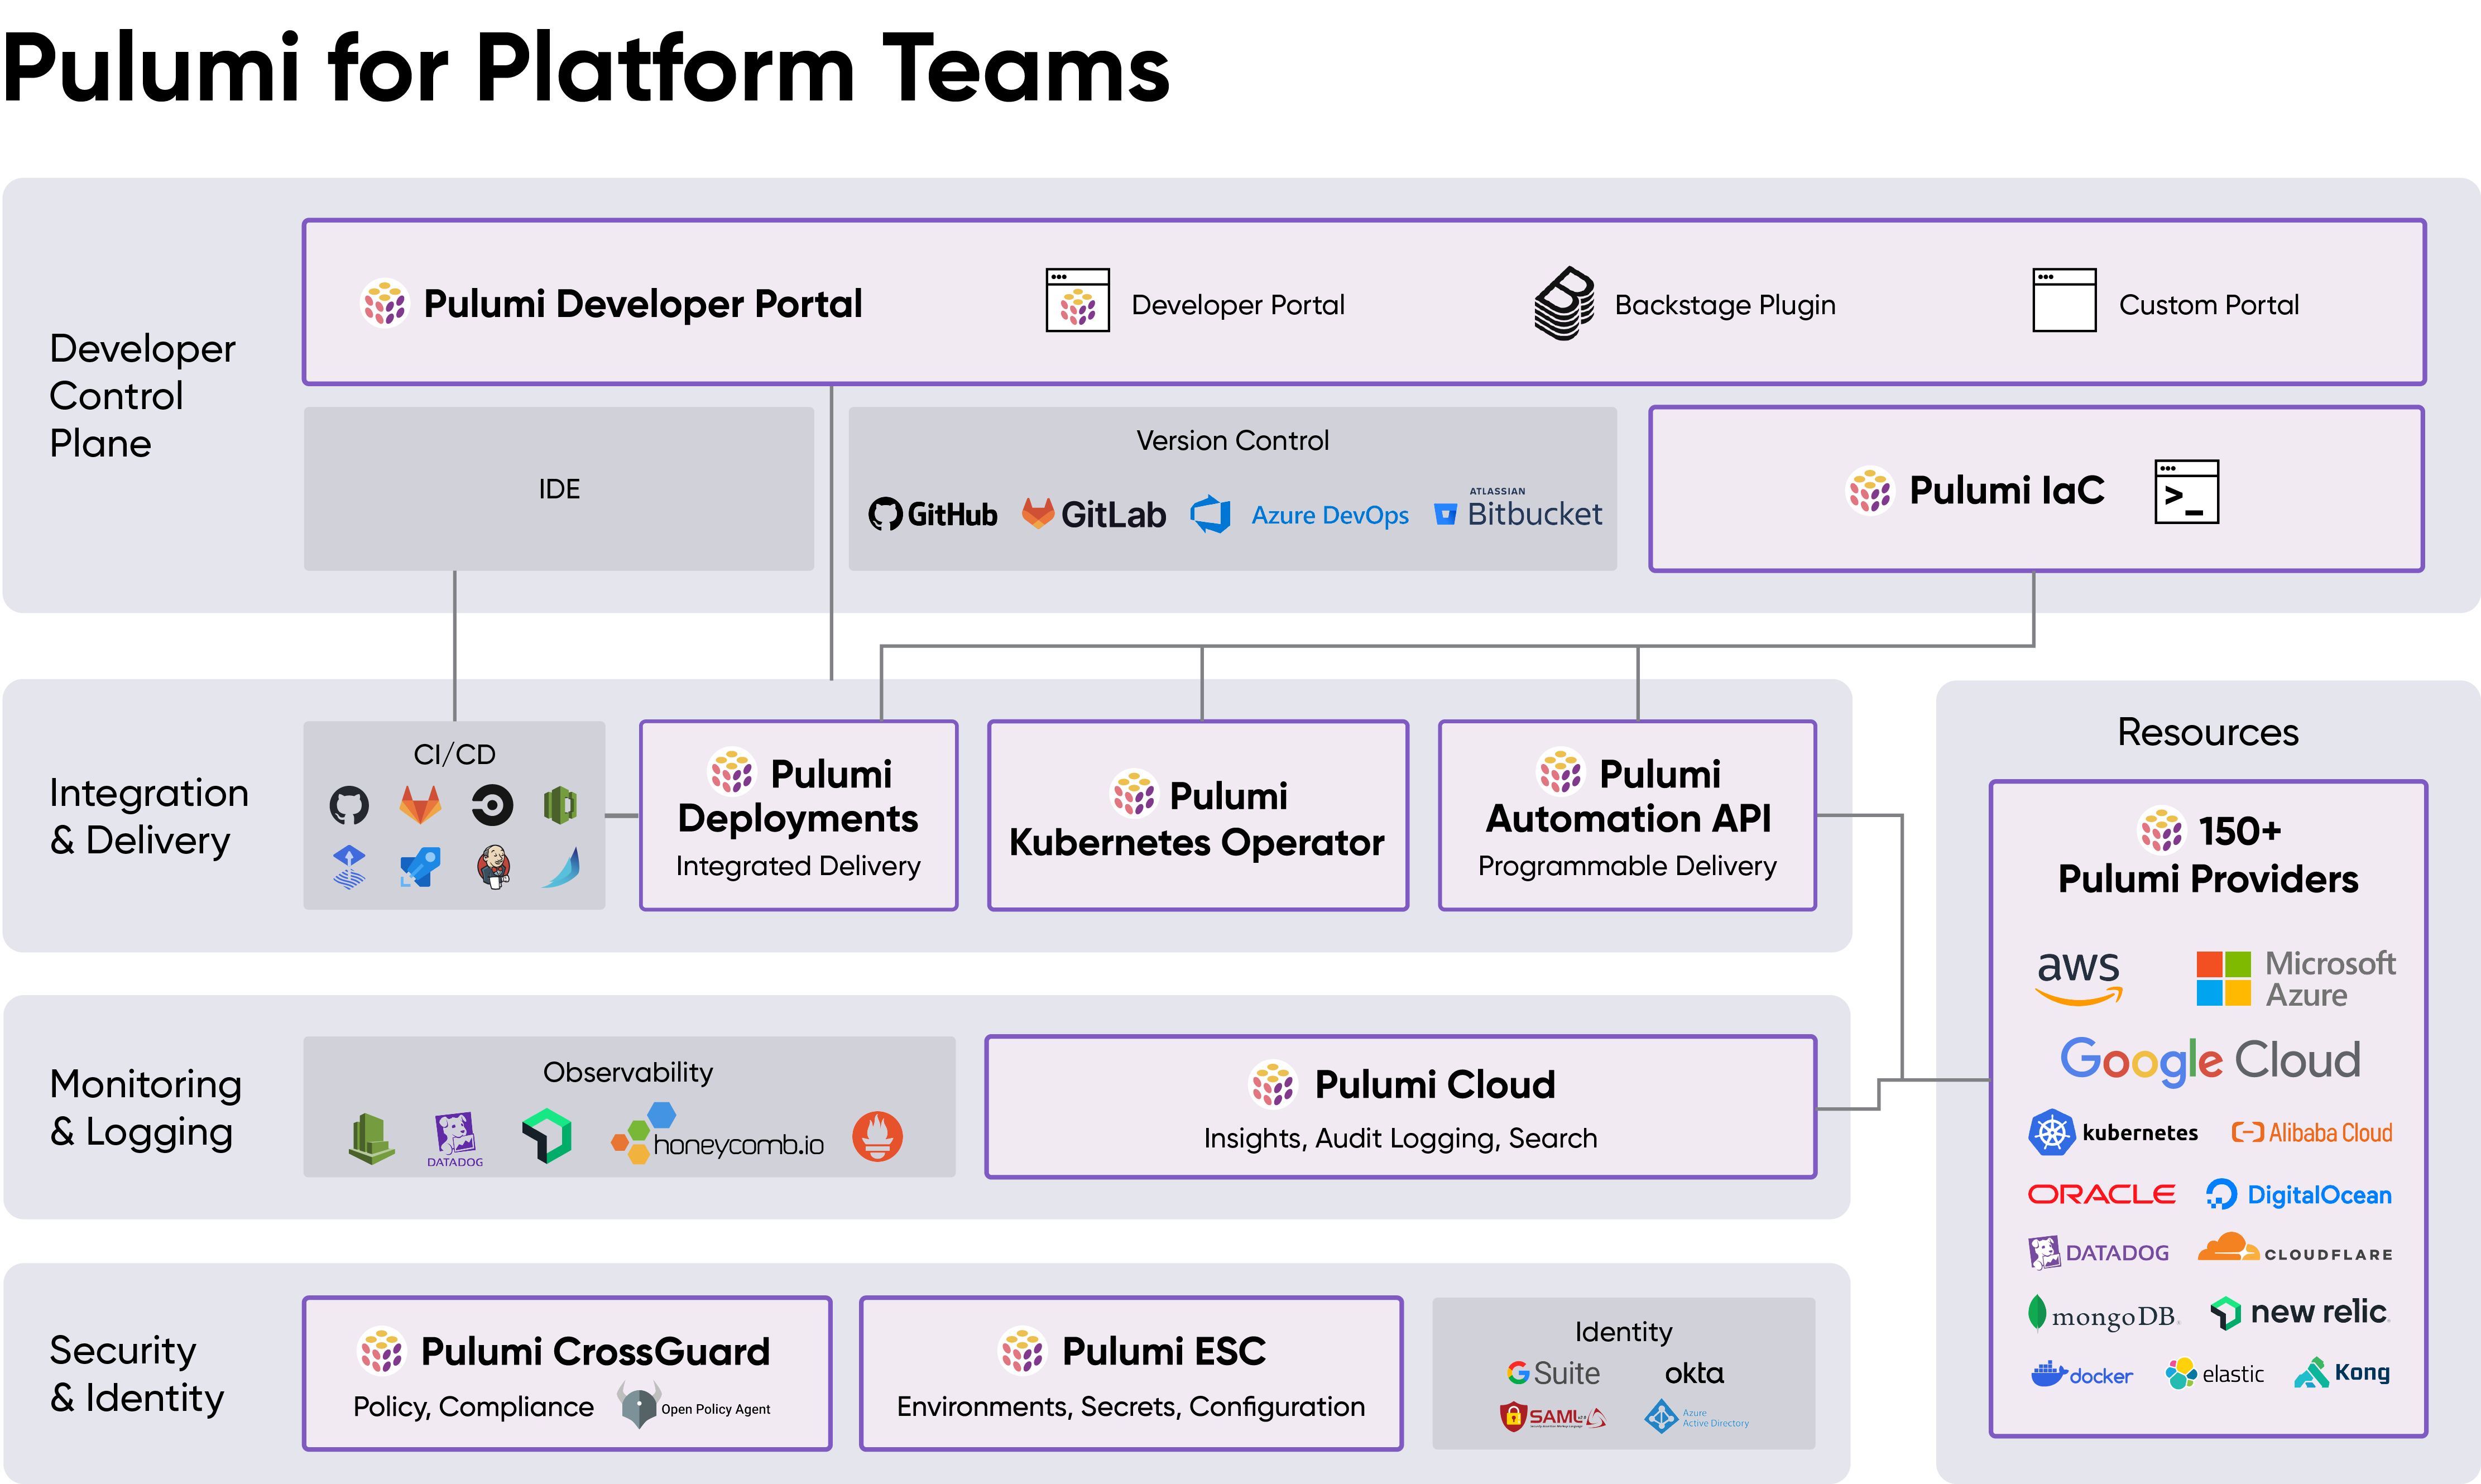 Pulumi for Platform Teams architecture diagram